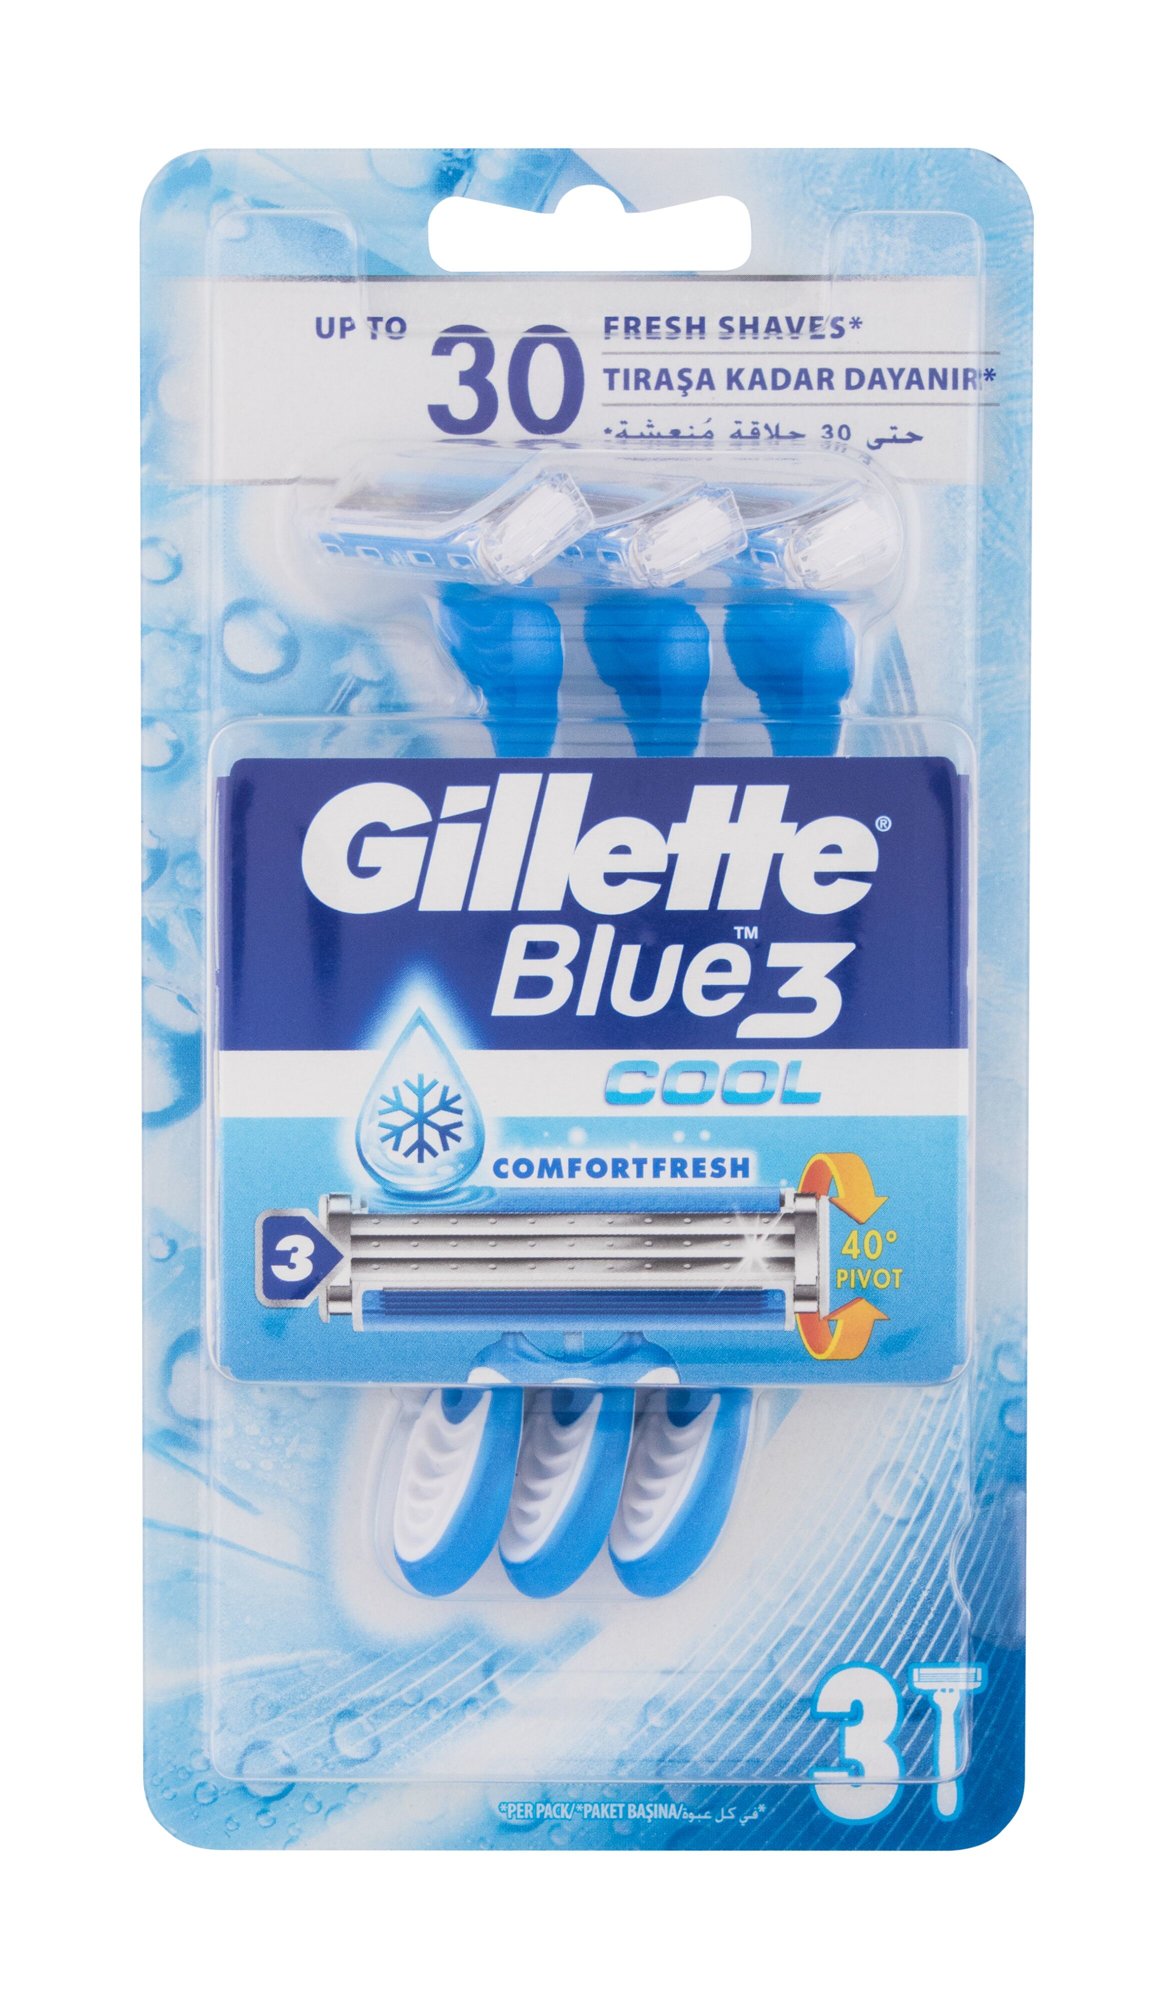 Gillette Blue3 Cool 3vnt skustuvas